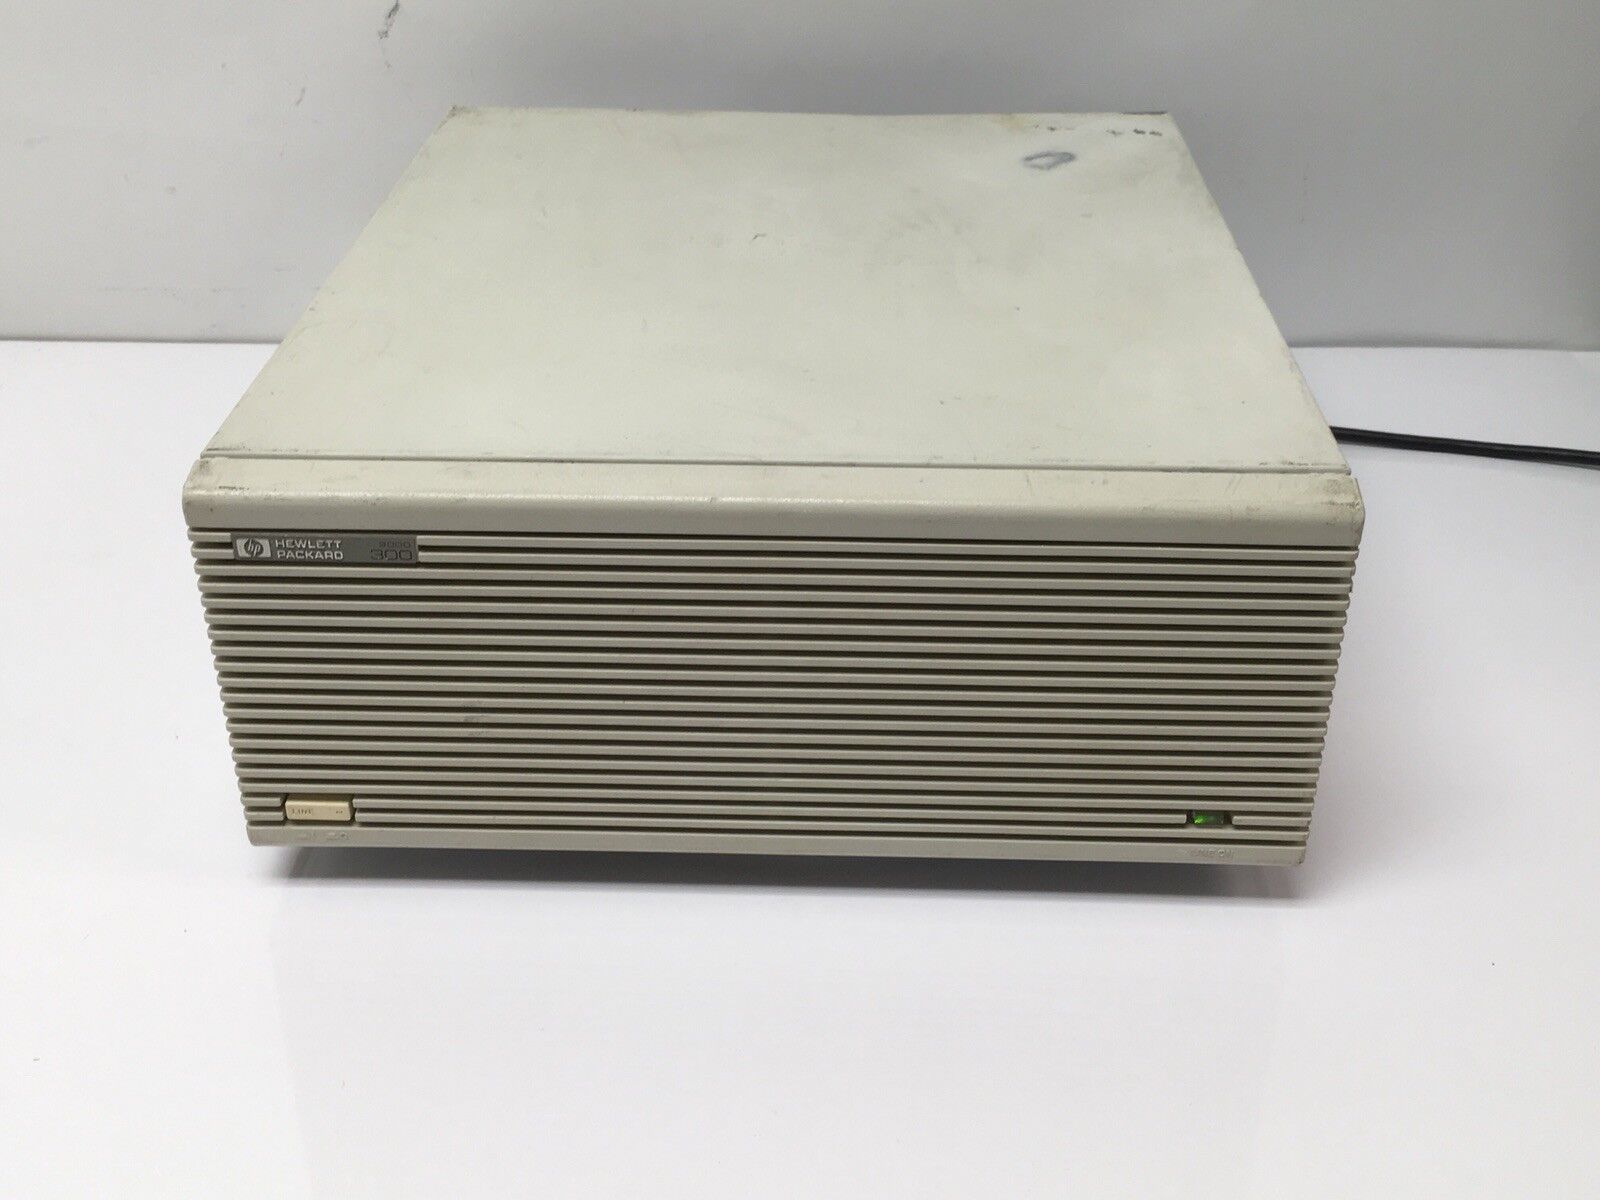 Vintage HP Agilent 98568A Desktop Computer Mainframe